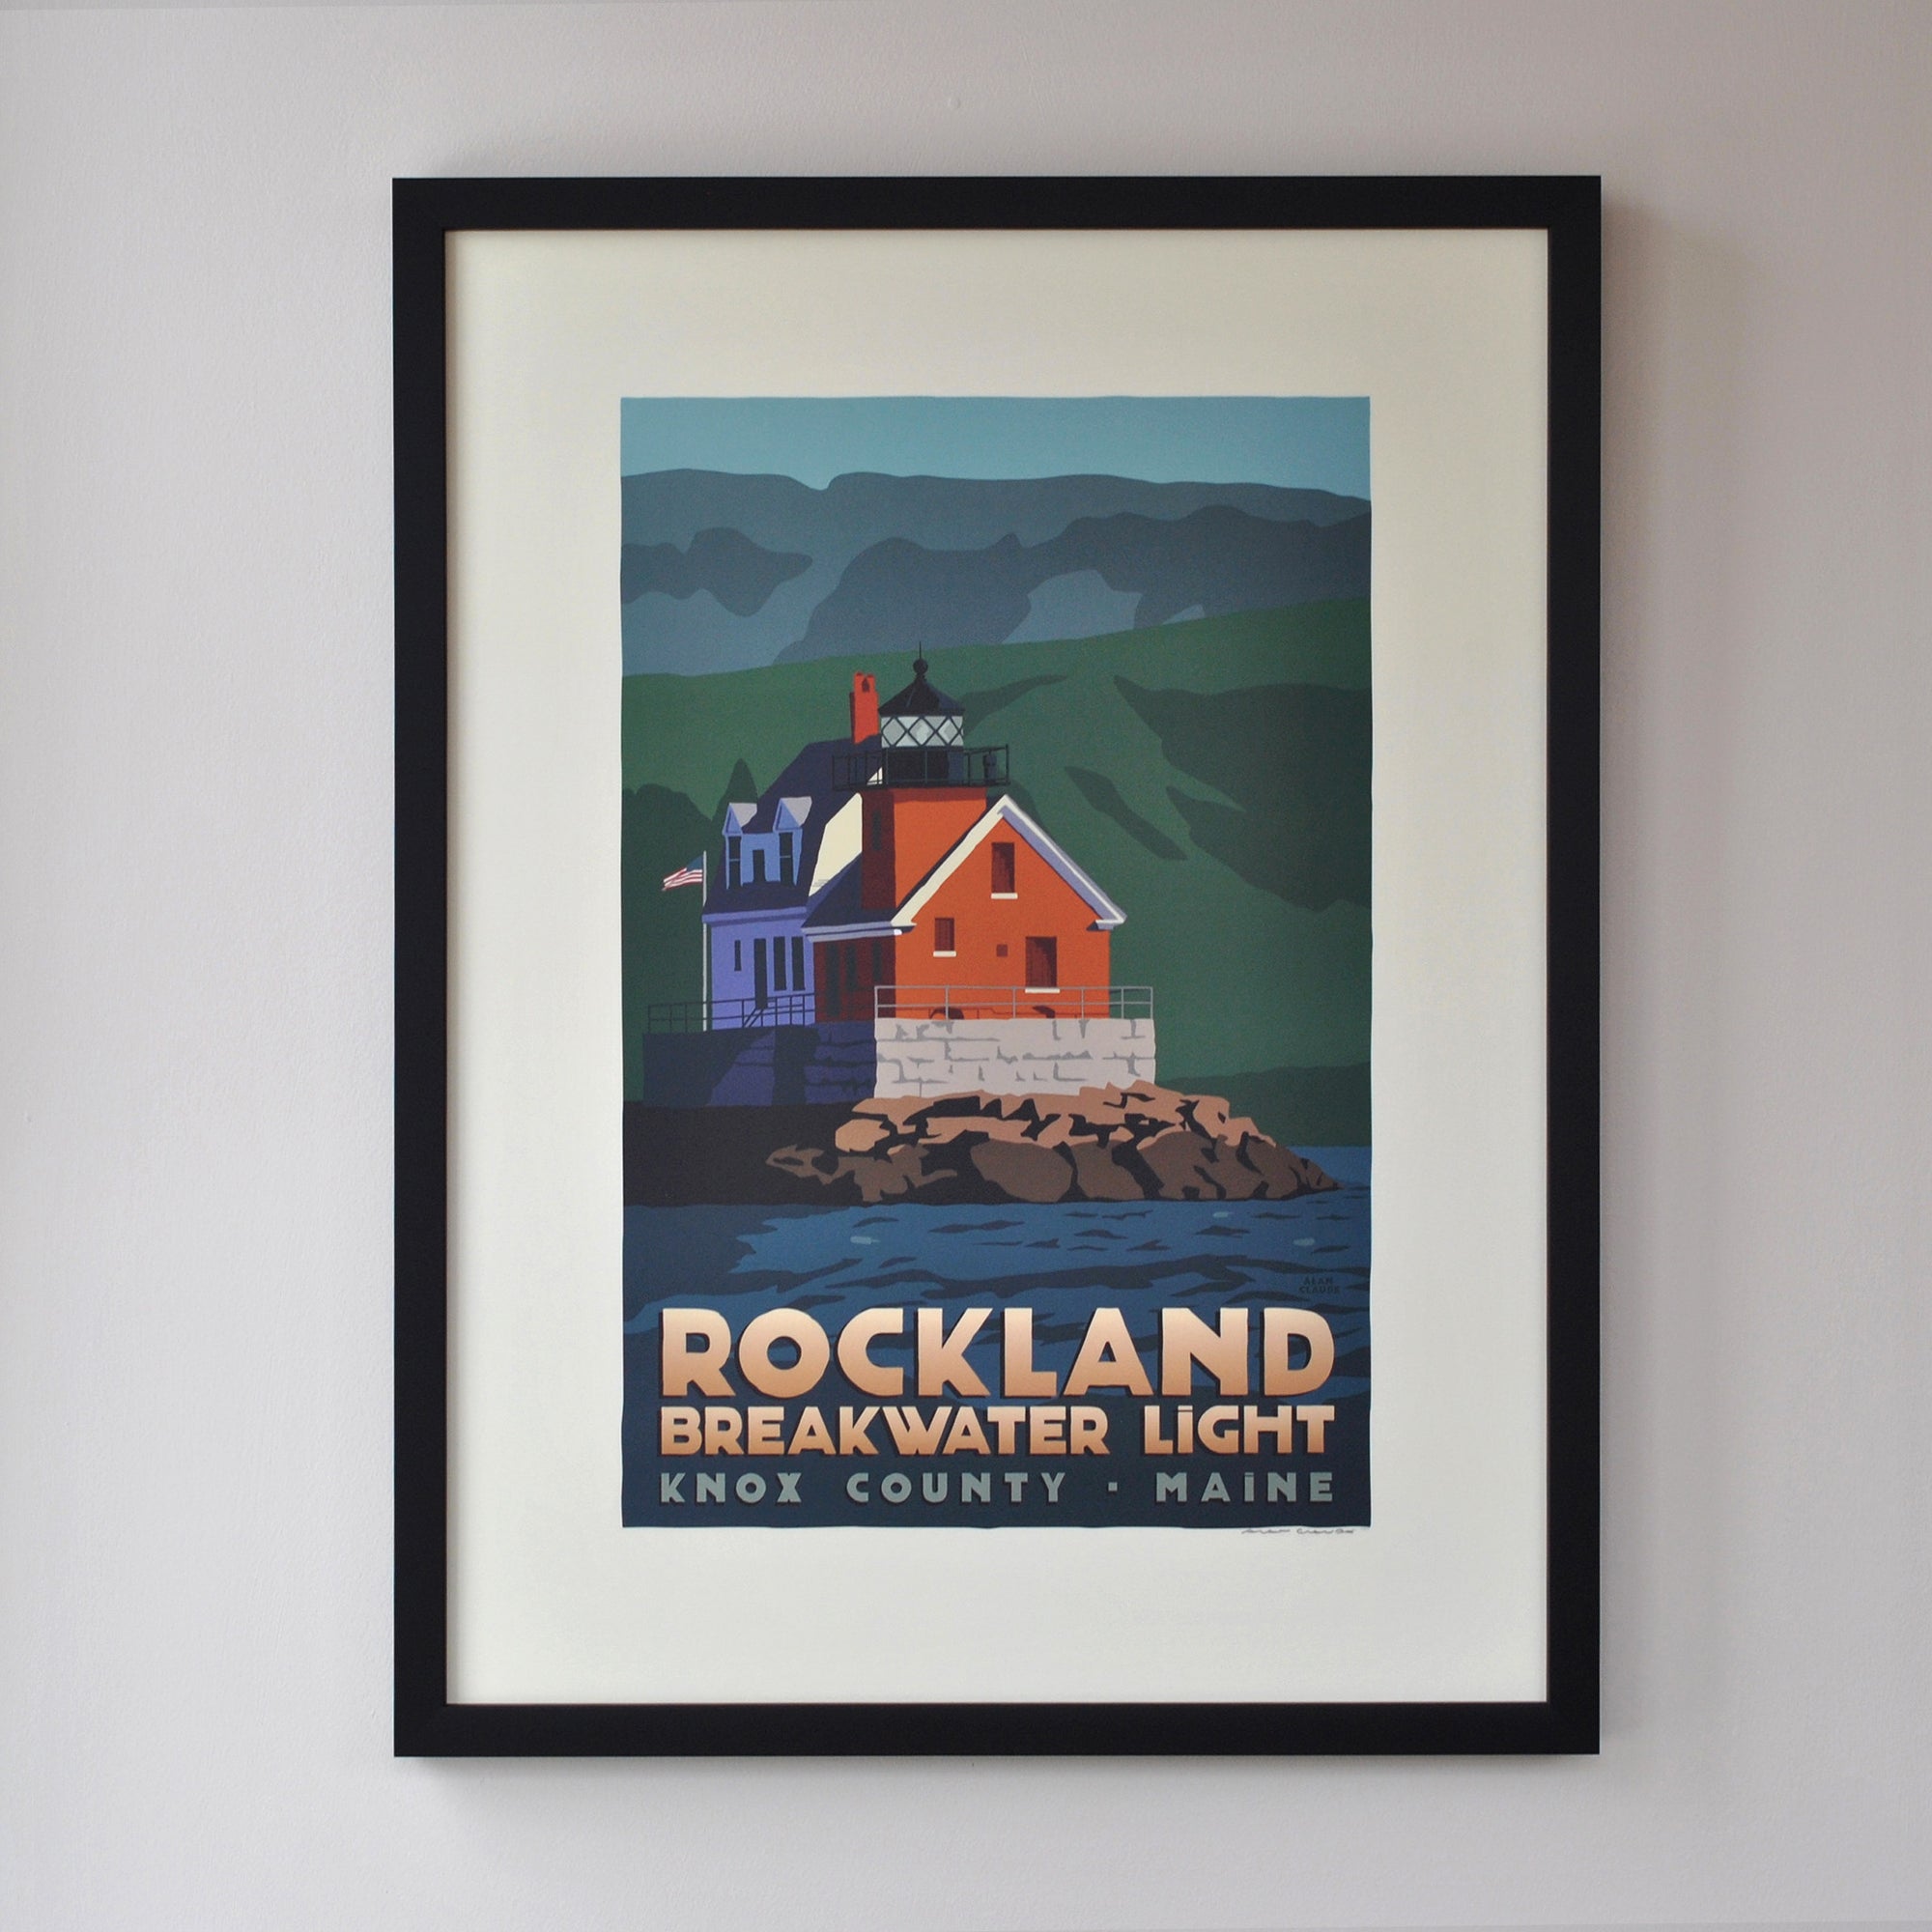 Rockland Breakwater Light Art Print 18" x 24" Framed Travel Poster By Alan Claude - Maine